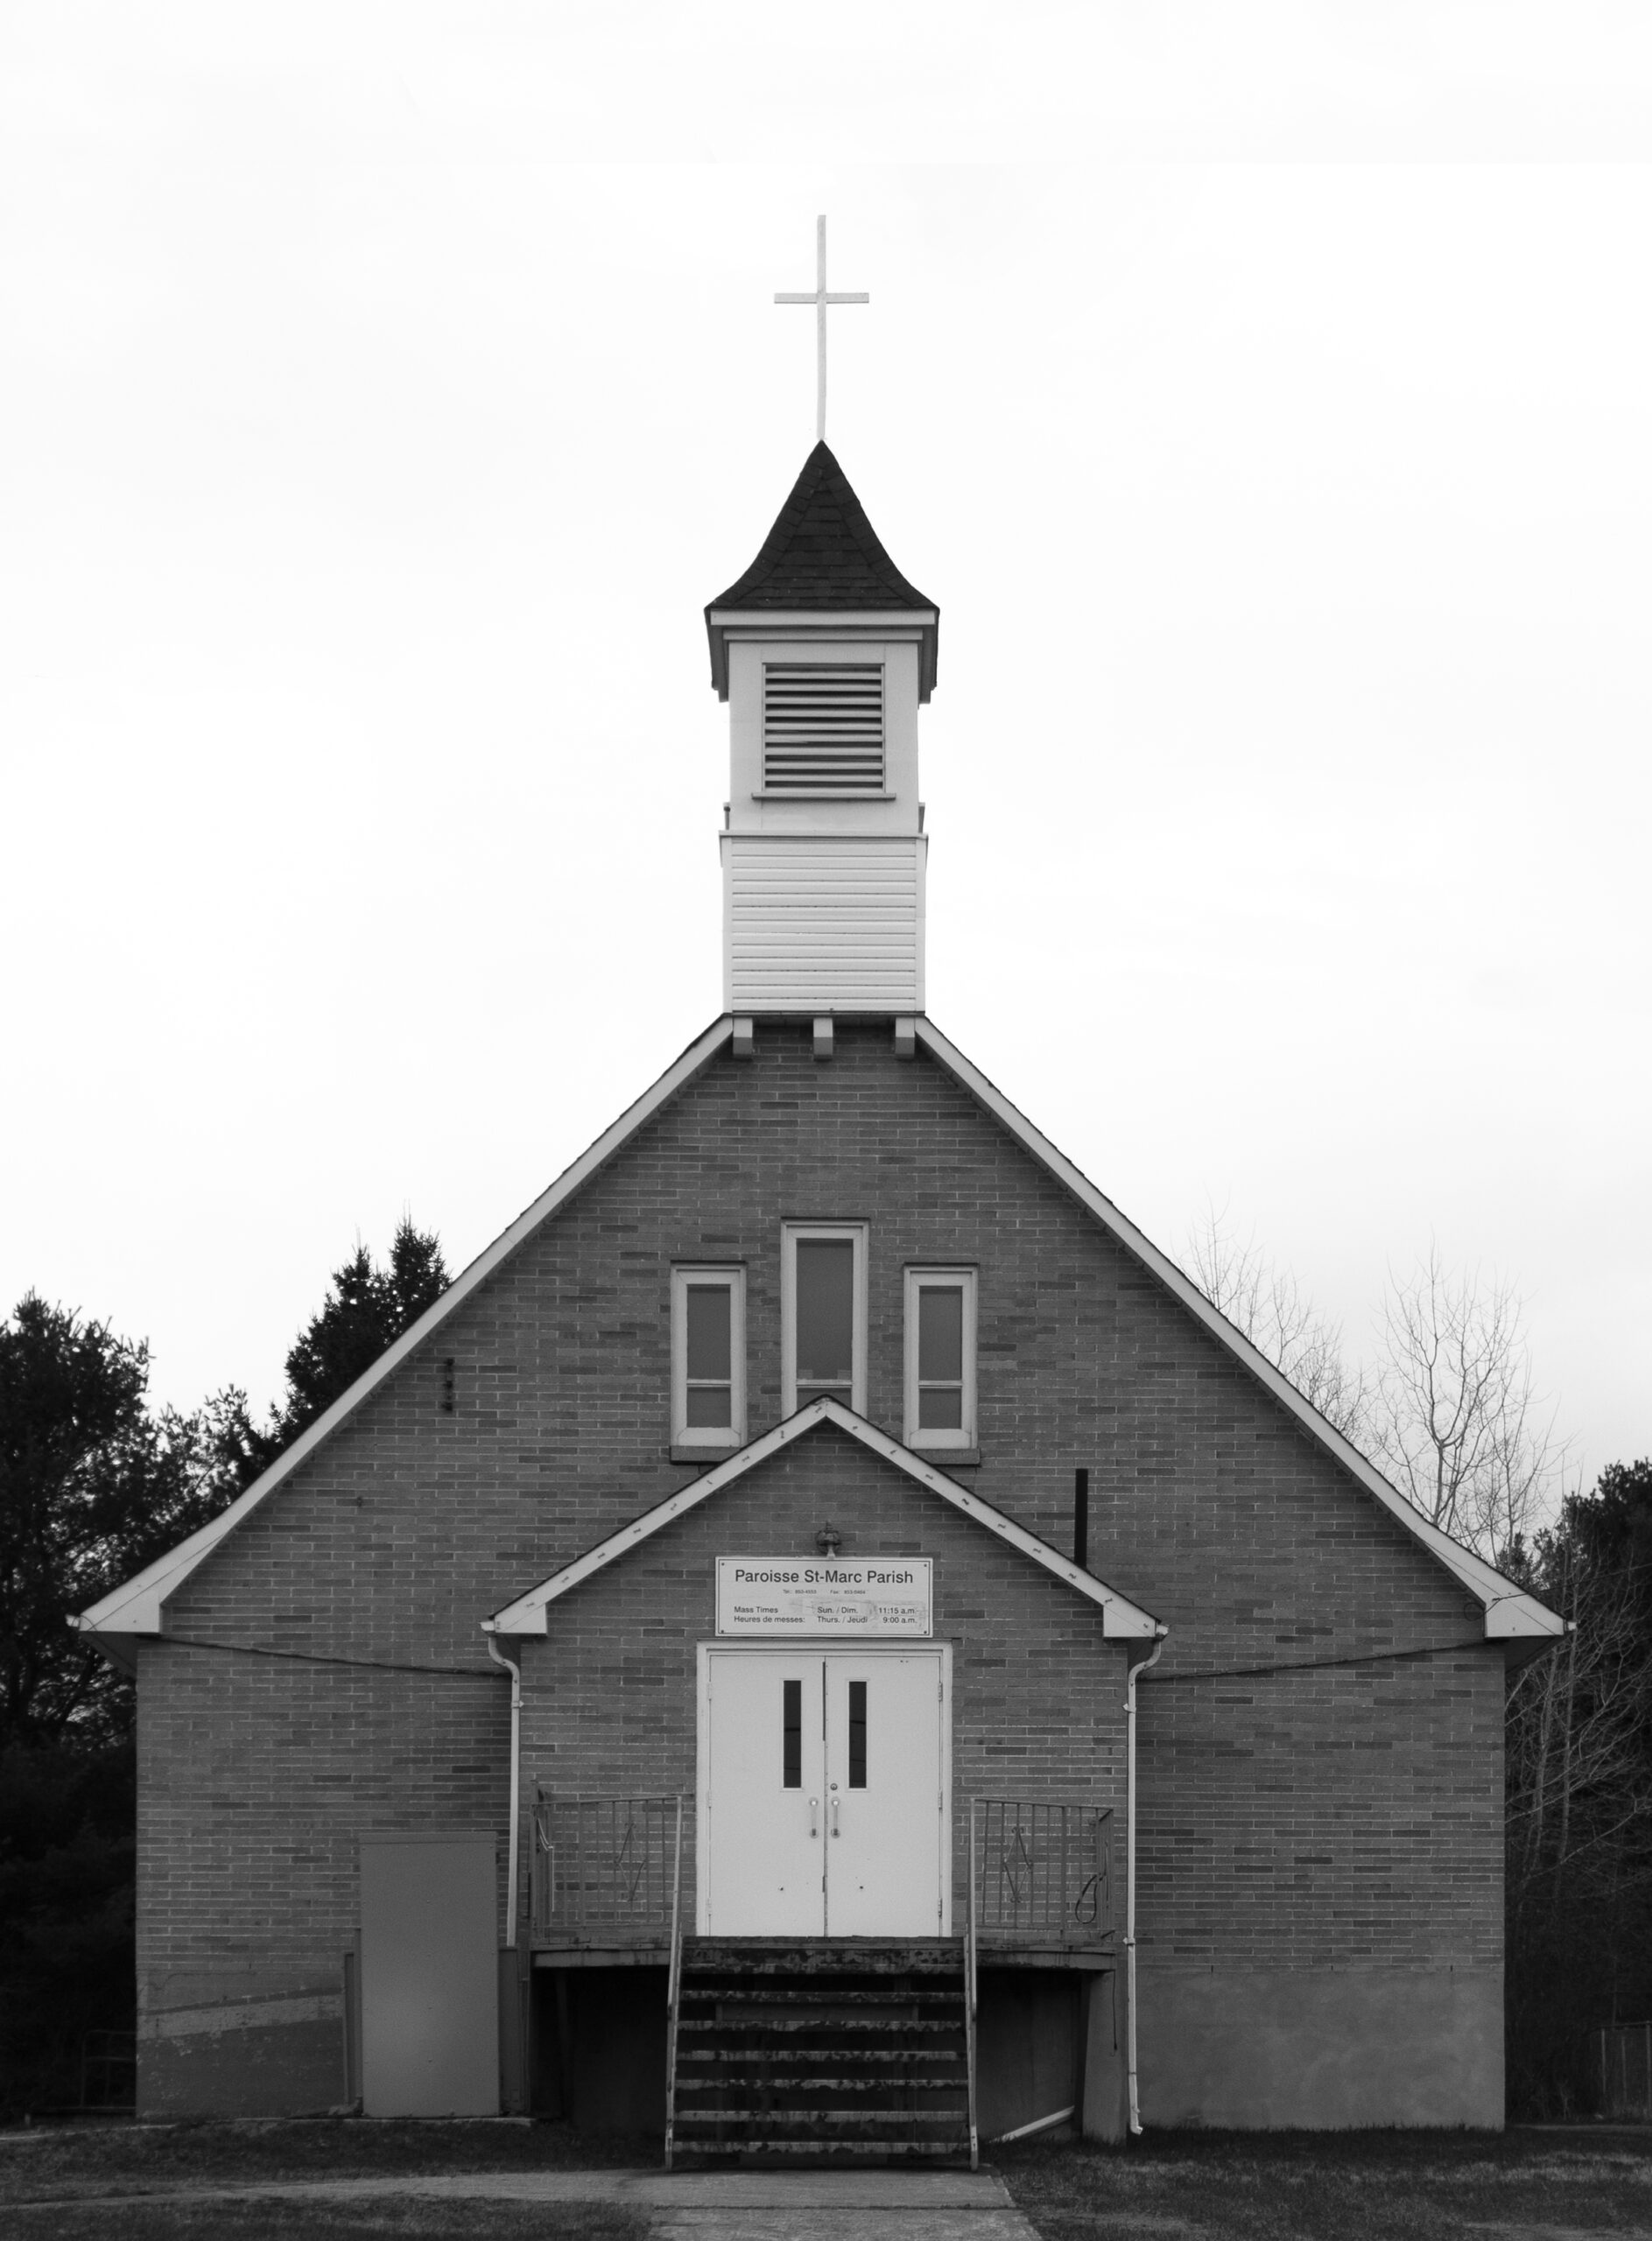 architecture photo of church